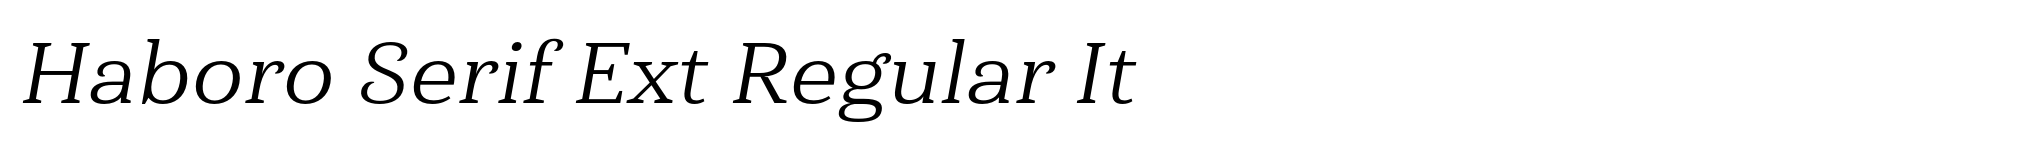 Haboro Serif Ext Regular It image